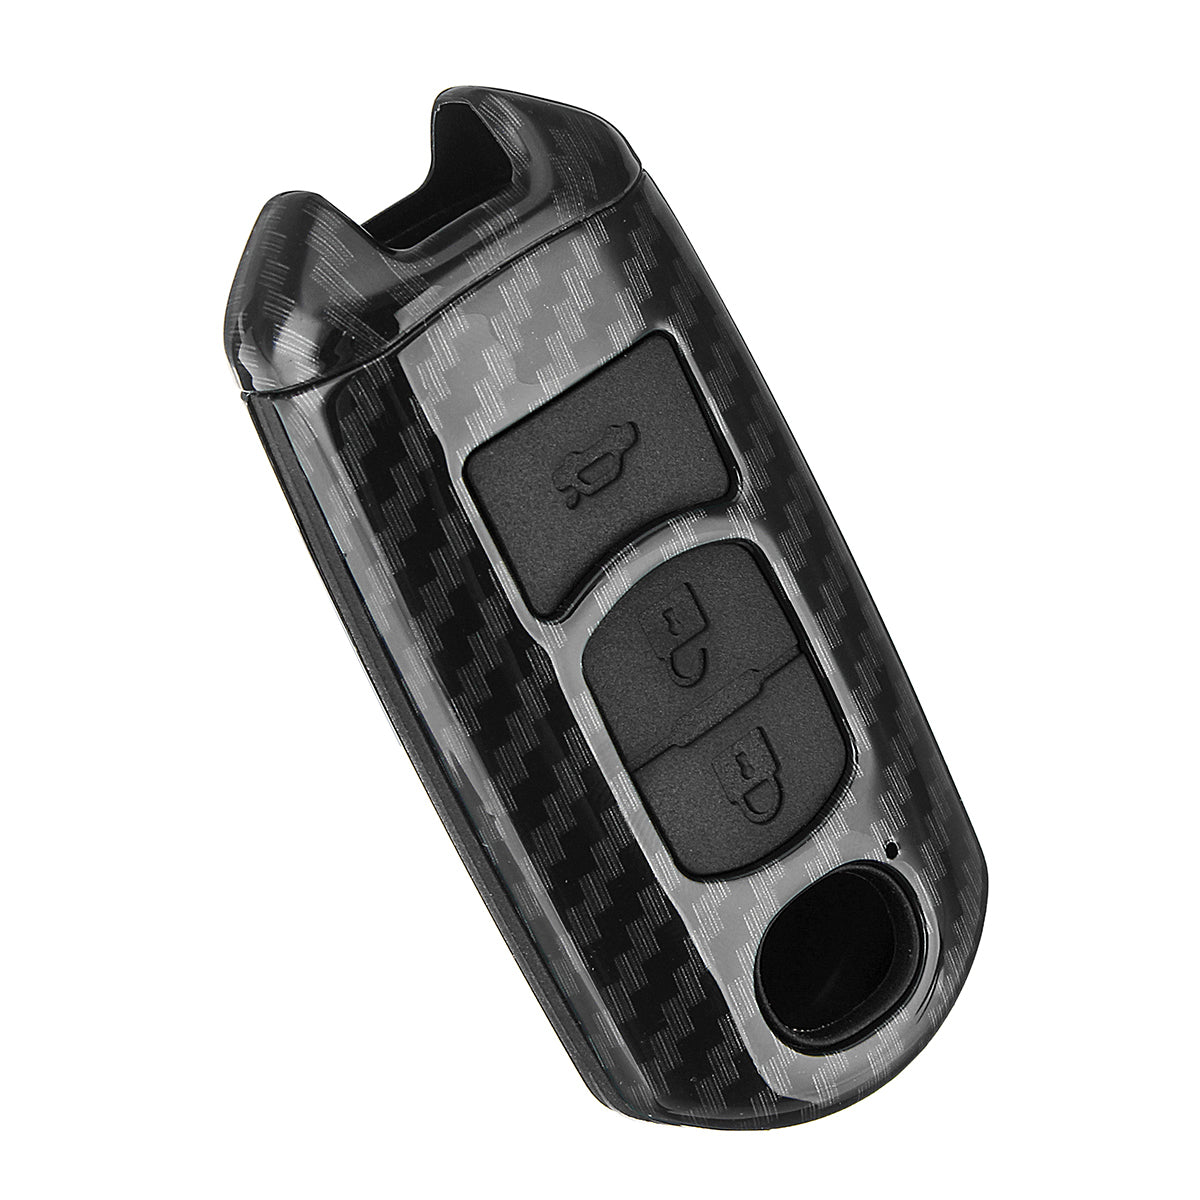 ABS Carbon Fiber Remote Smart Car Key Case/Bag Cover Fob Shell for Mazda 3/5/6/CX3/CX5 - Auto GoShop